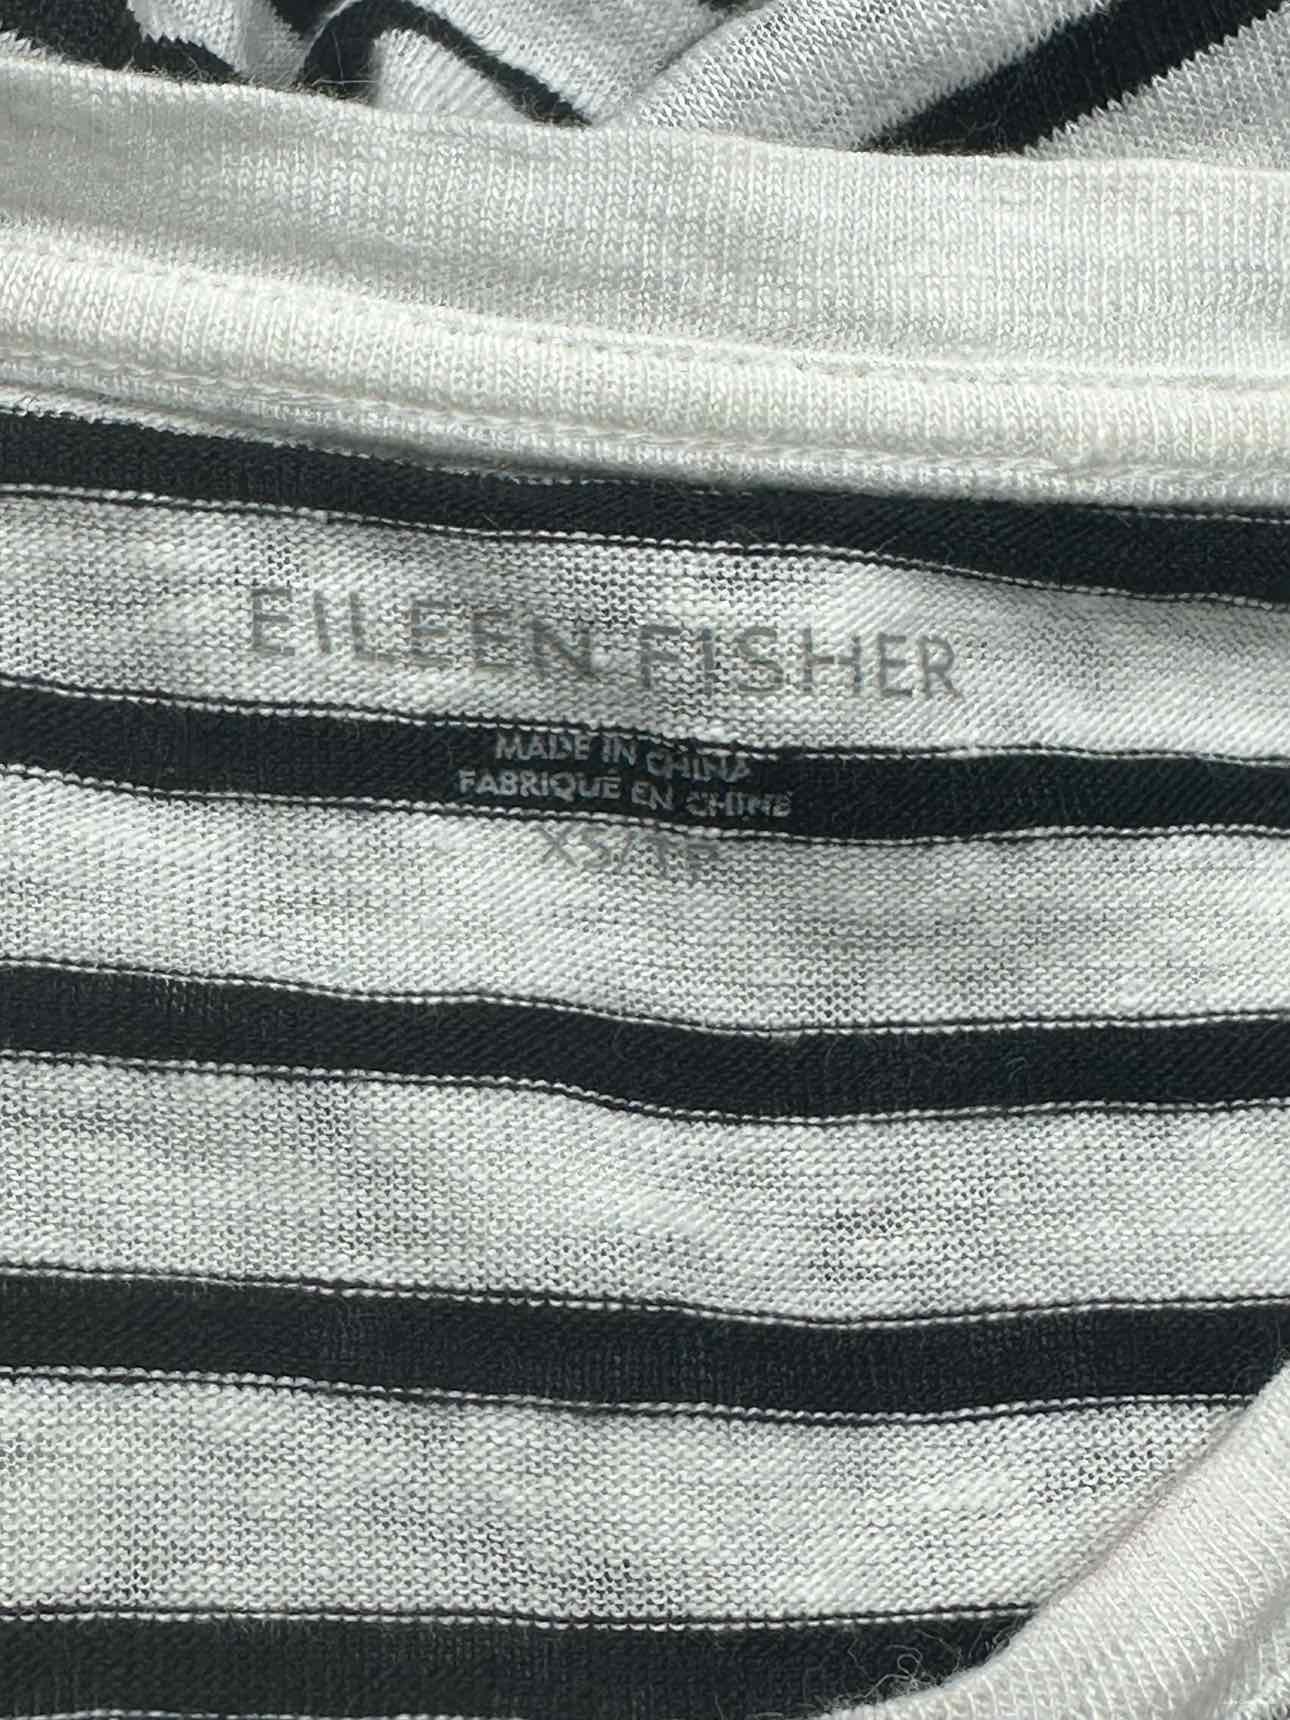 EILEEN FISHER Striped 100% Organic Linen Top Size XS